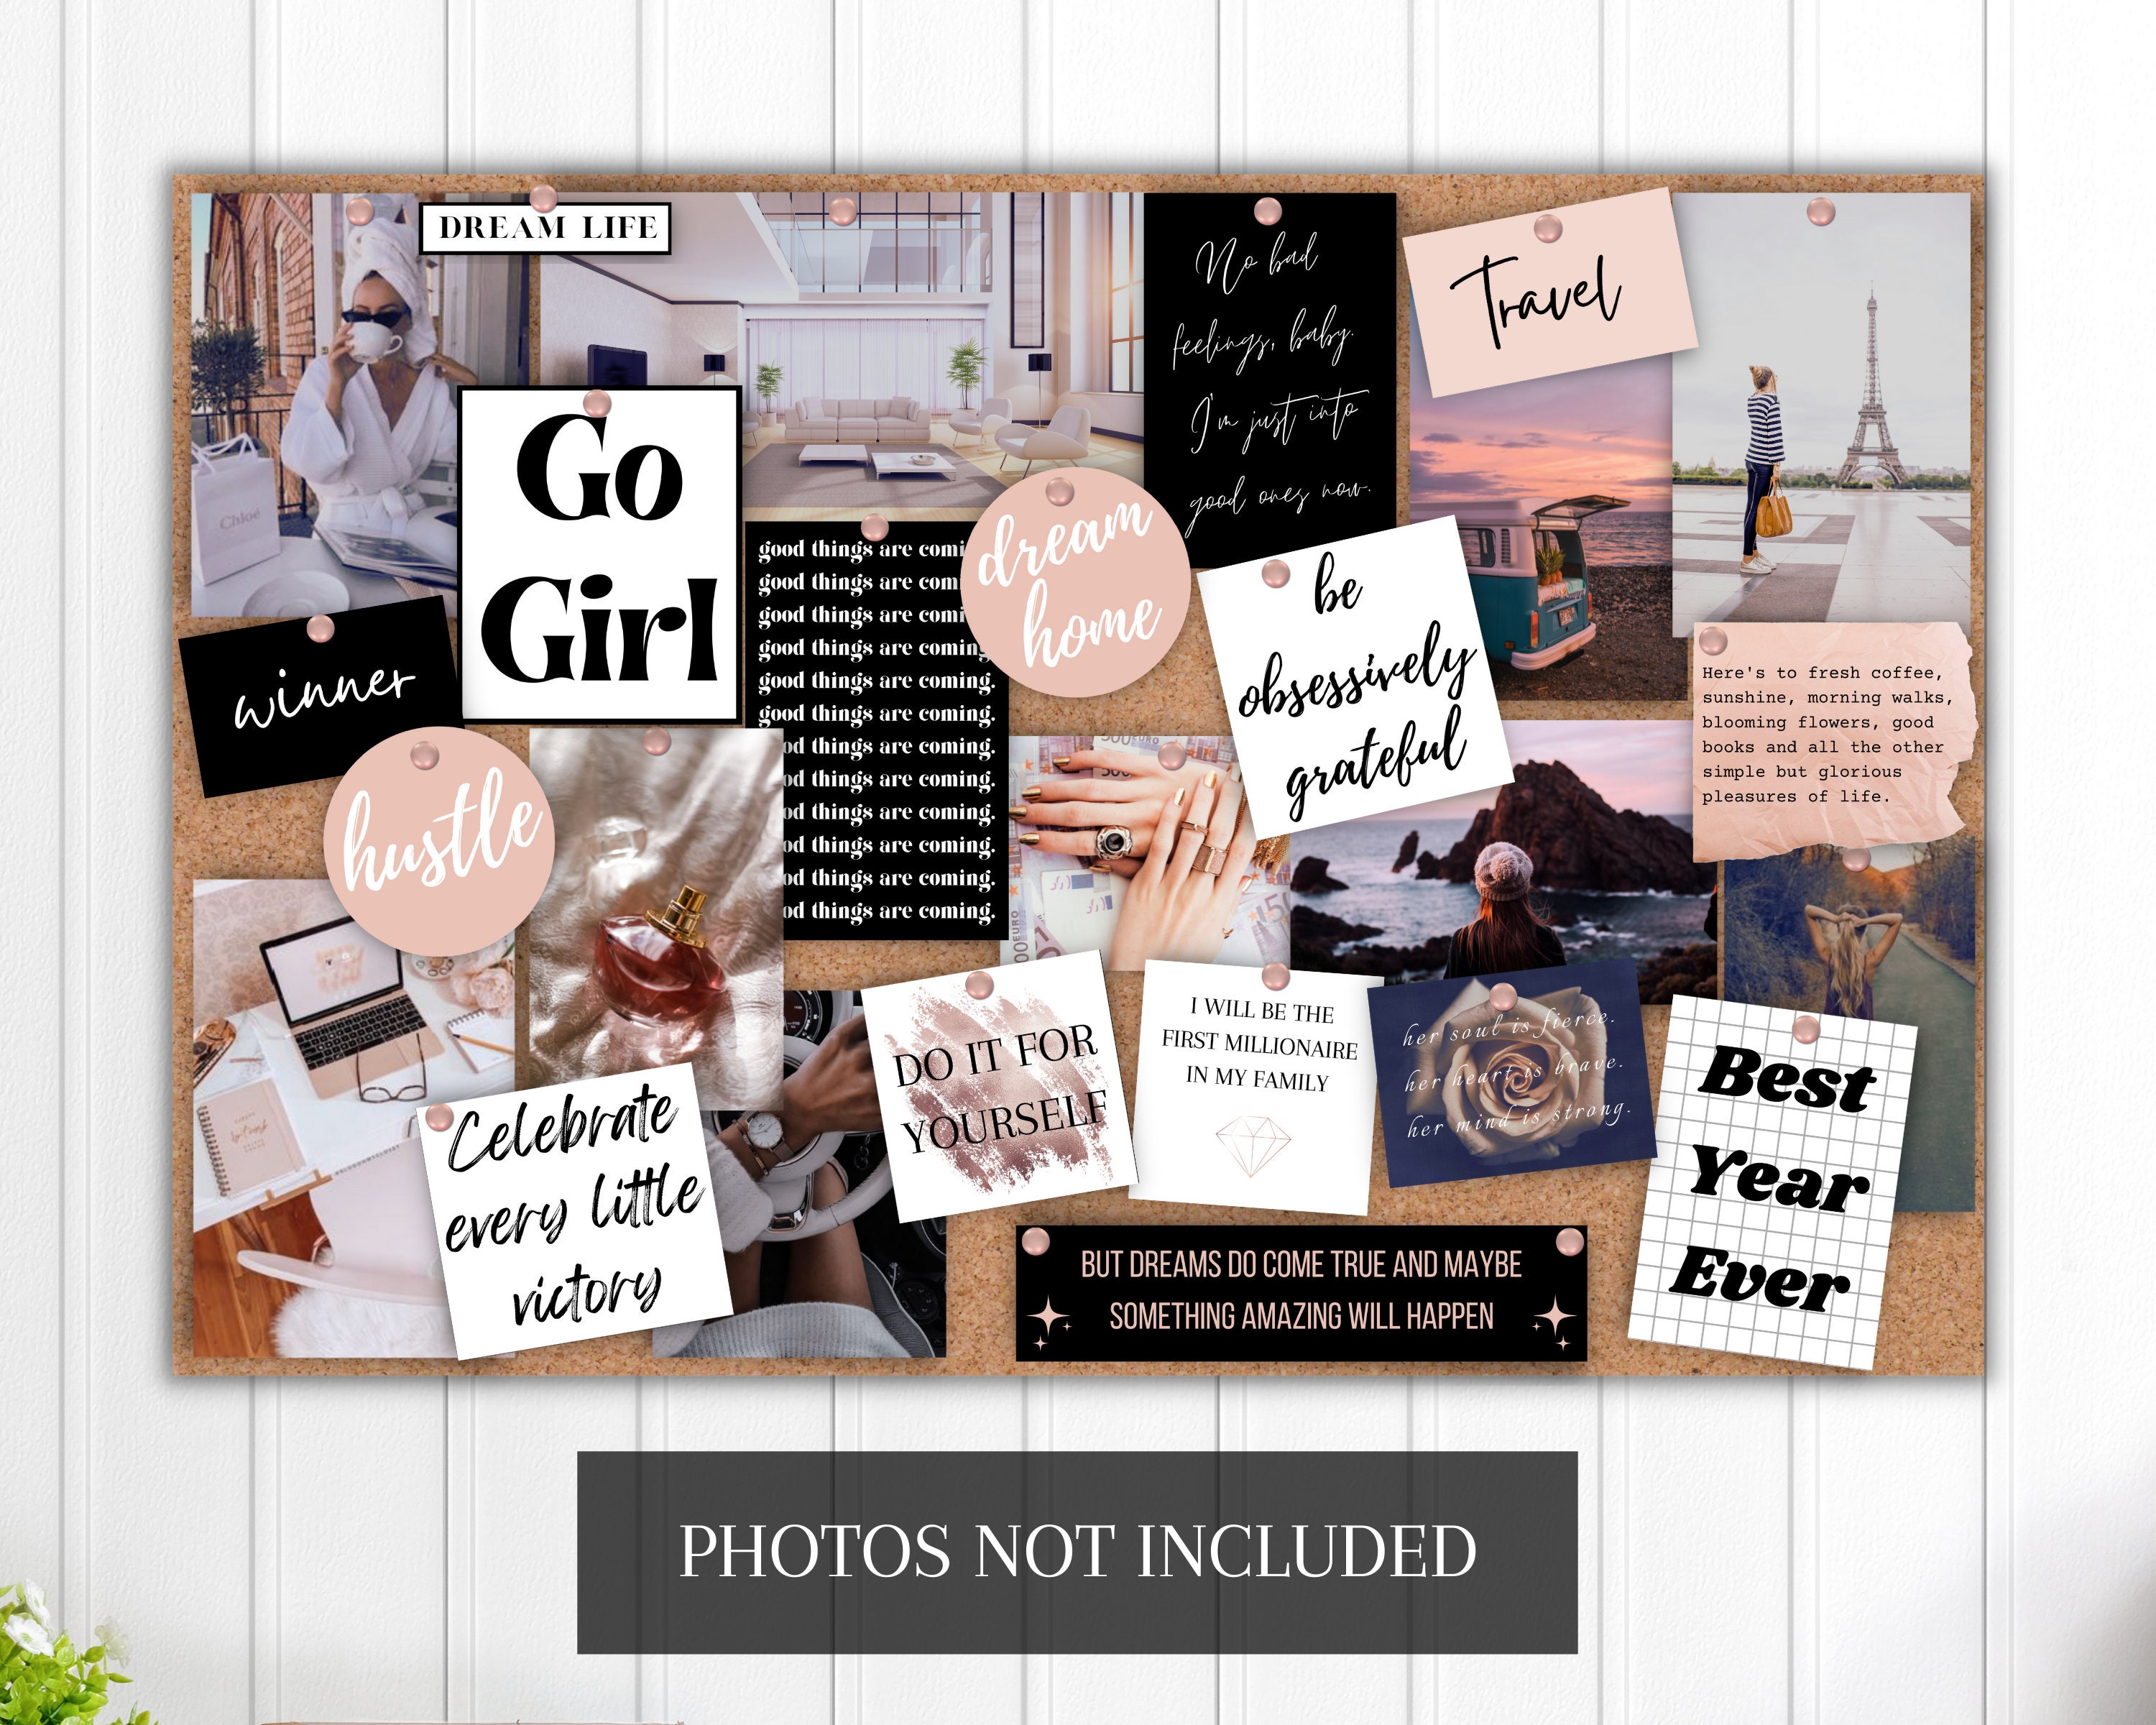 Natalie's Vision Board Planner: Personalized Name Journal for Women & Girls  Named Natalie Gift Idea|Cute Dreams Tracker & Life Goals Setting Gratitude